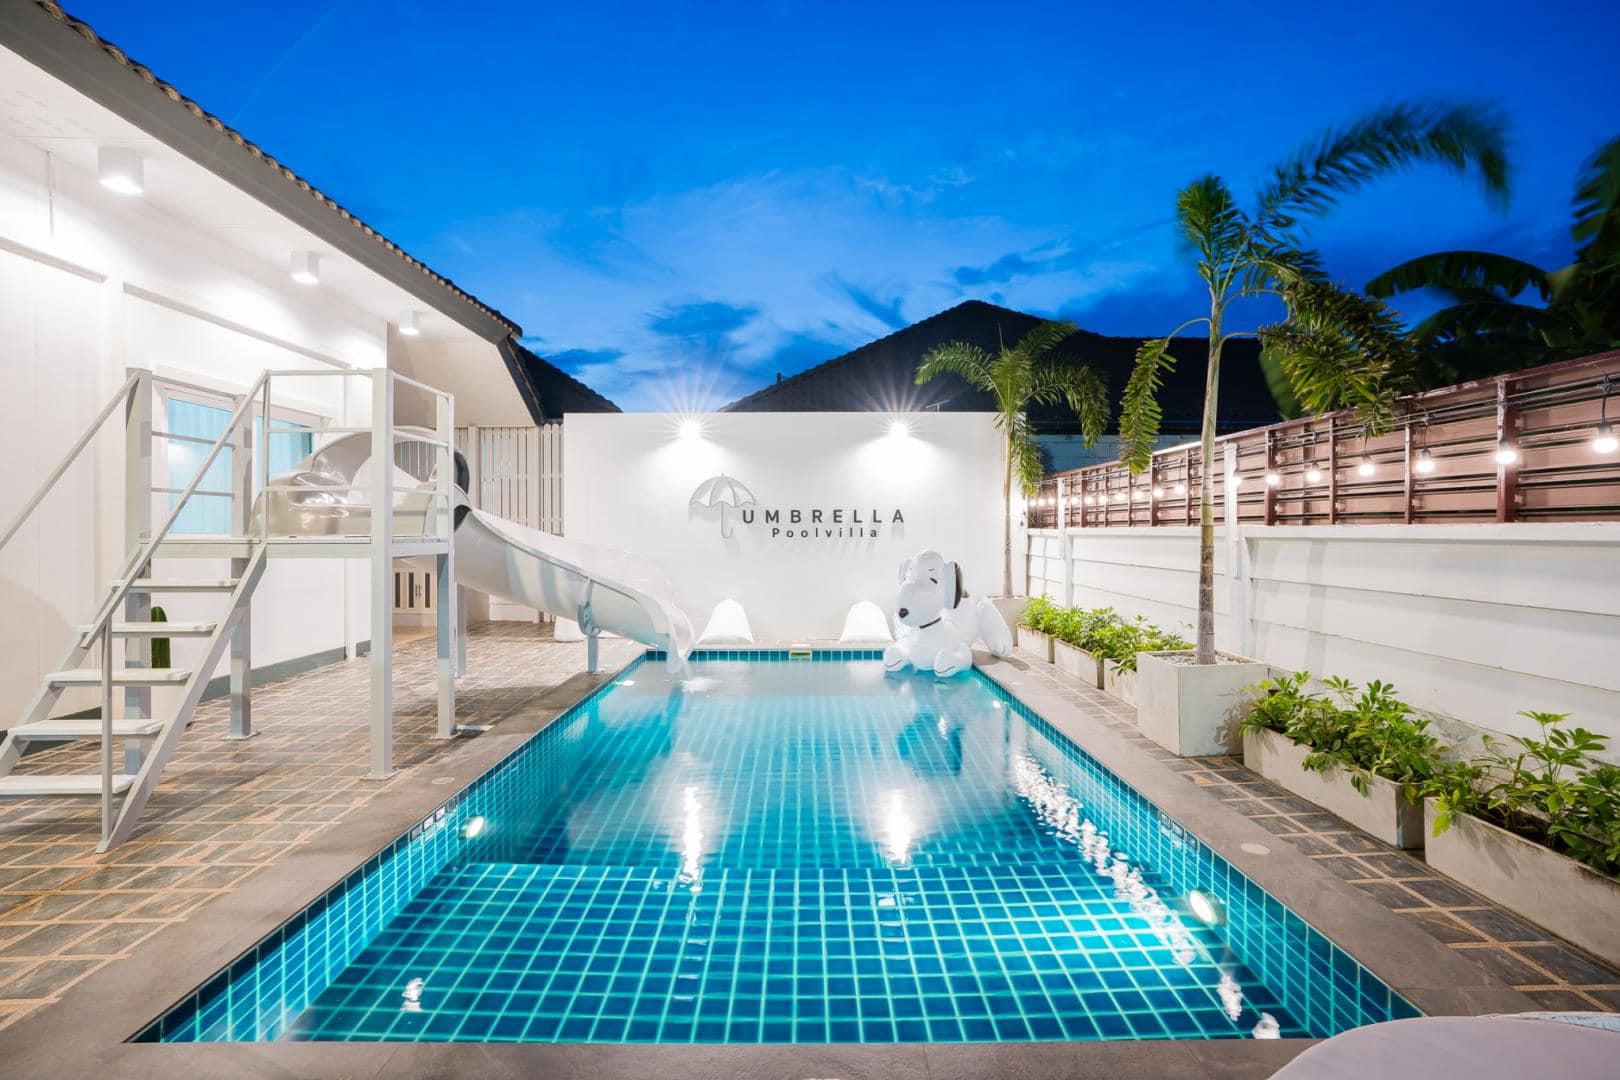 Umbrella Poolvilla Pattaya